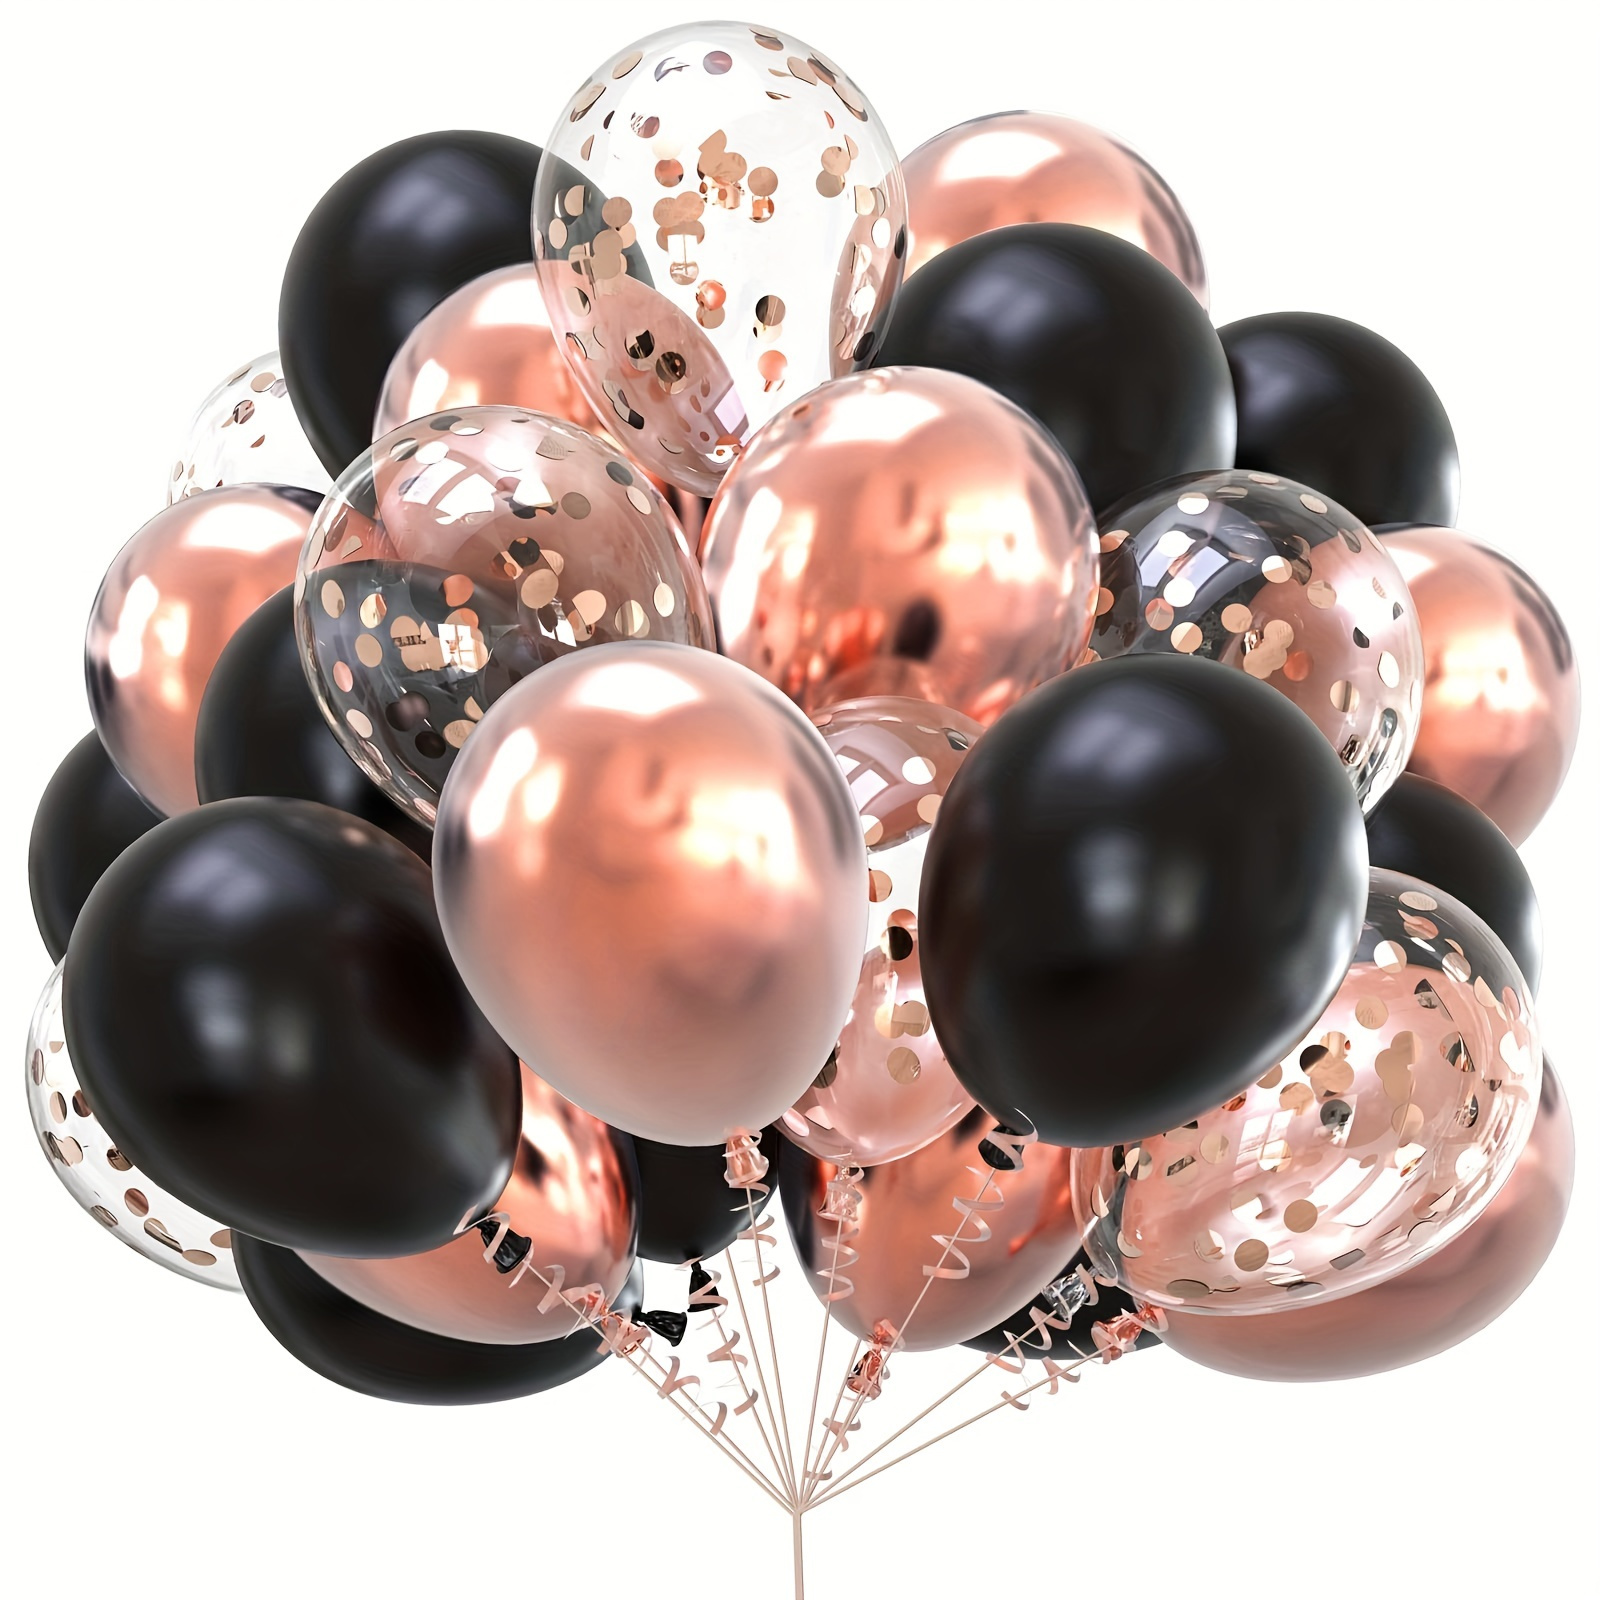 

45-piece Matte Black & Rose Golden Balloon Set - Ideal For Birthdays, Bridal Showers, Weddings & Anniversaries Flower Balls For Wedding Centerpieces